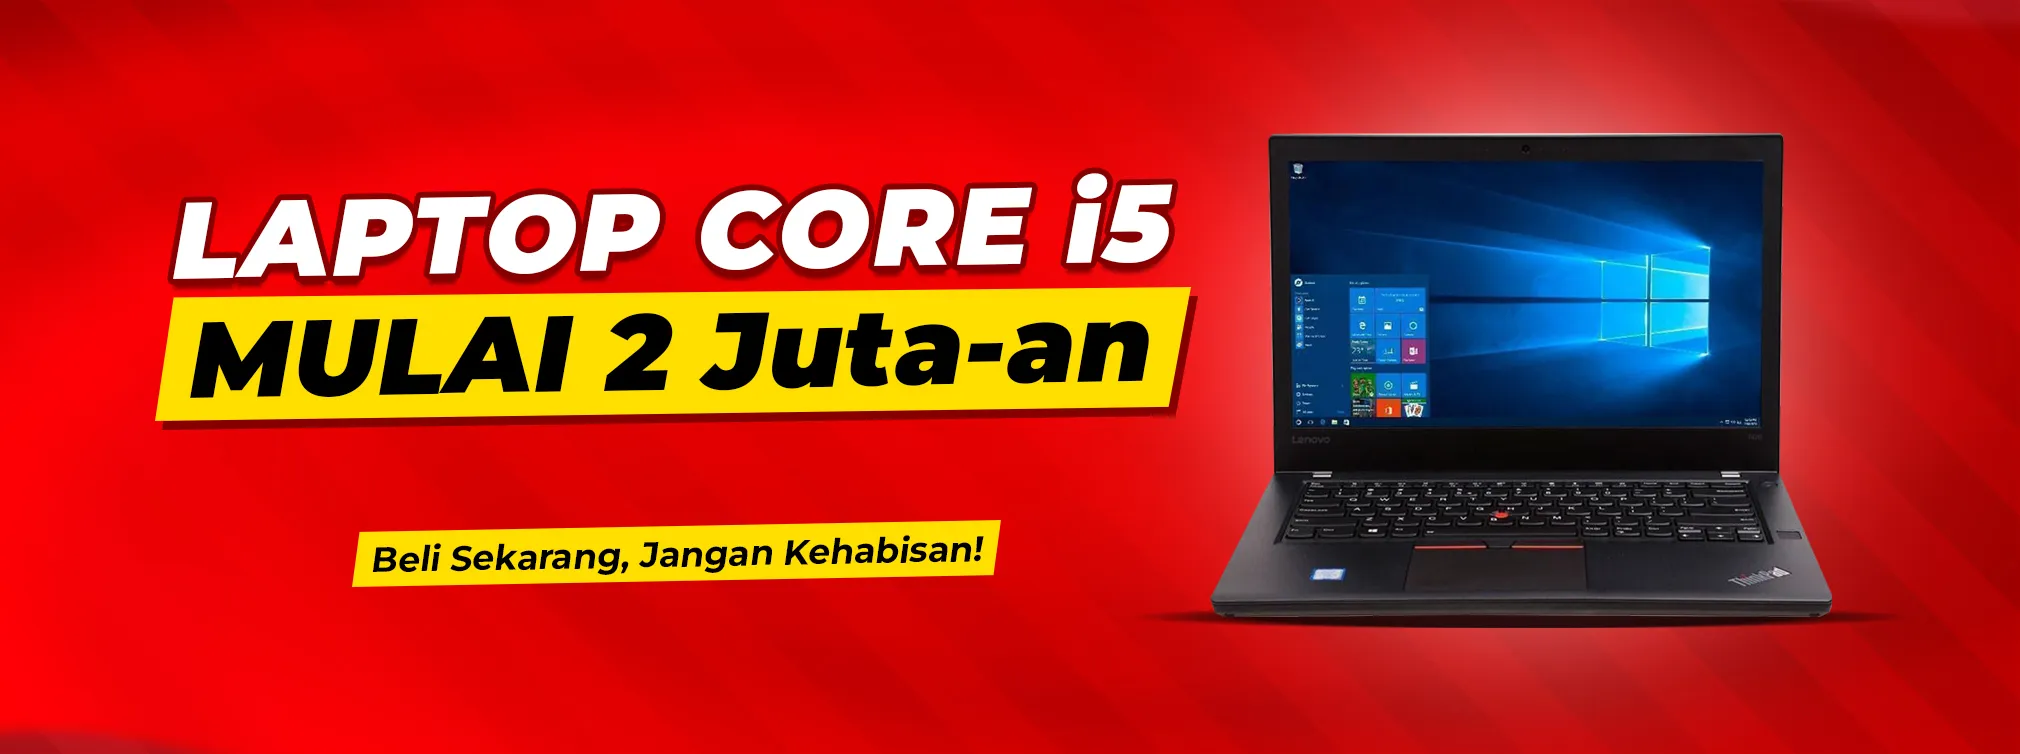 laptop core i5 2 jutaan